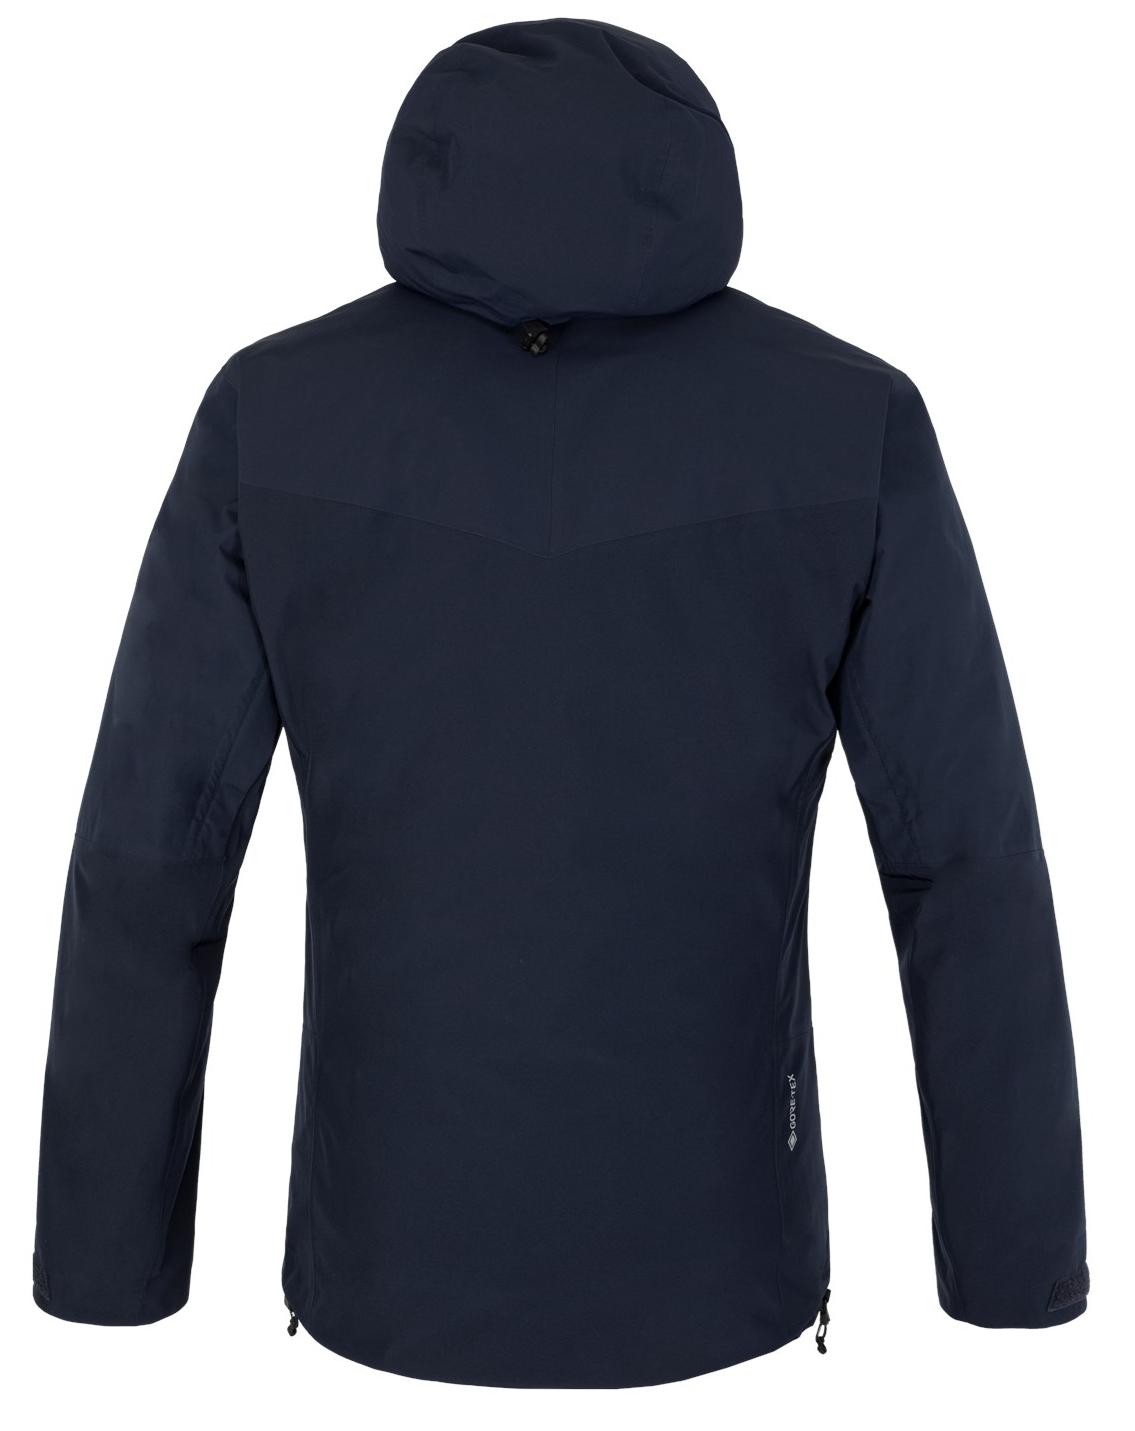 Куртка для активного отдыха Salewa Stelvio Gtx L Men's Jkt Navy Blazer/0910